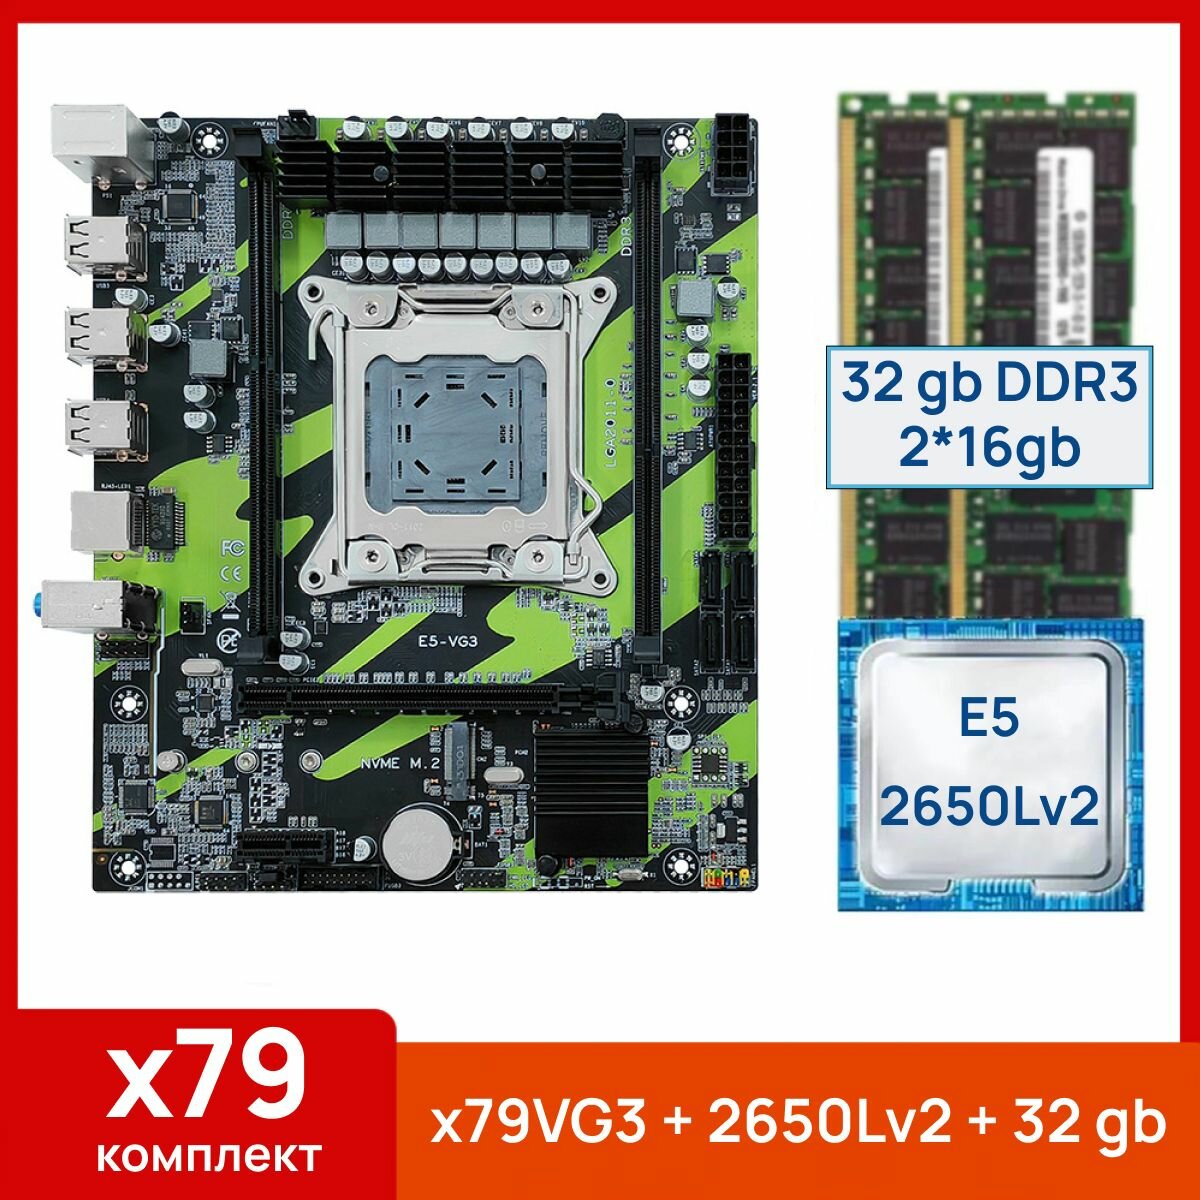 Комплект: Atermiter X79VG3 + Xeon E5 2650Lv2 + 32 gb(2x16gb) DDR3 ecc reg